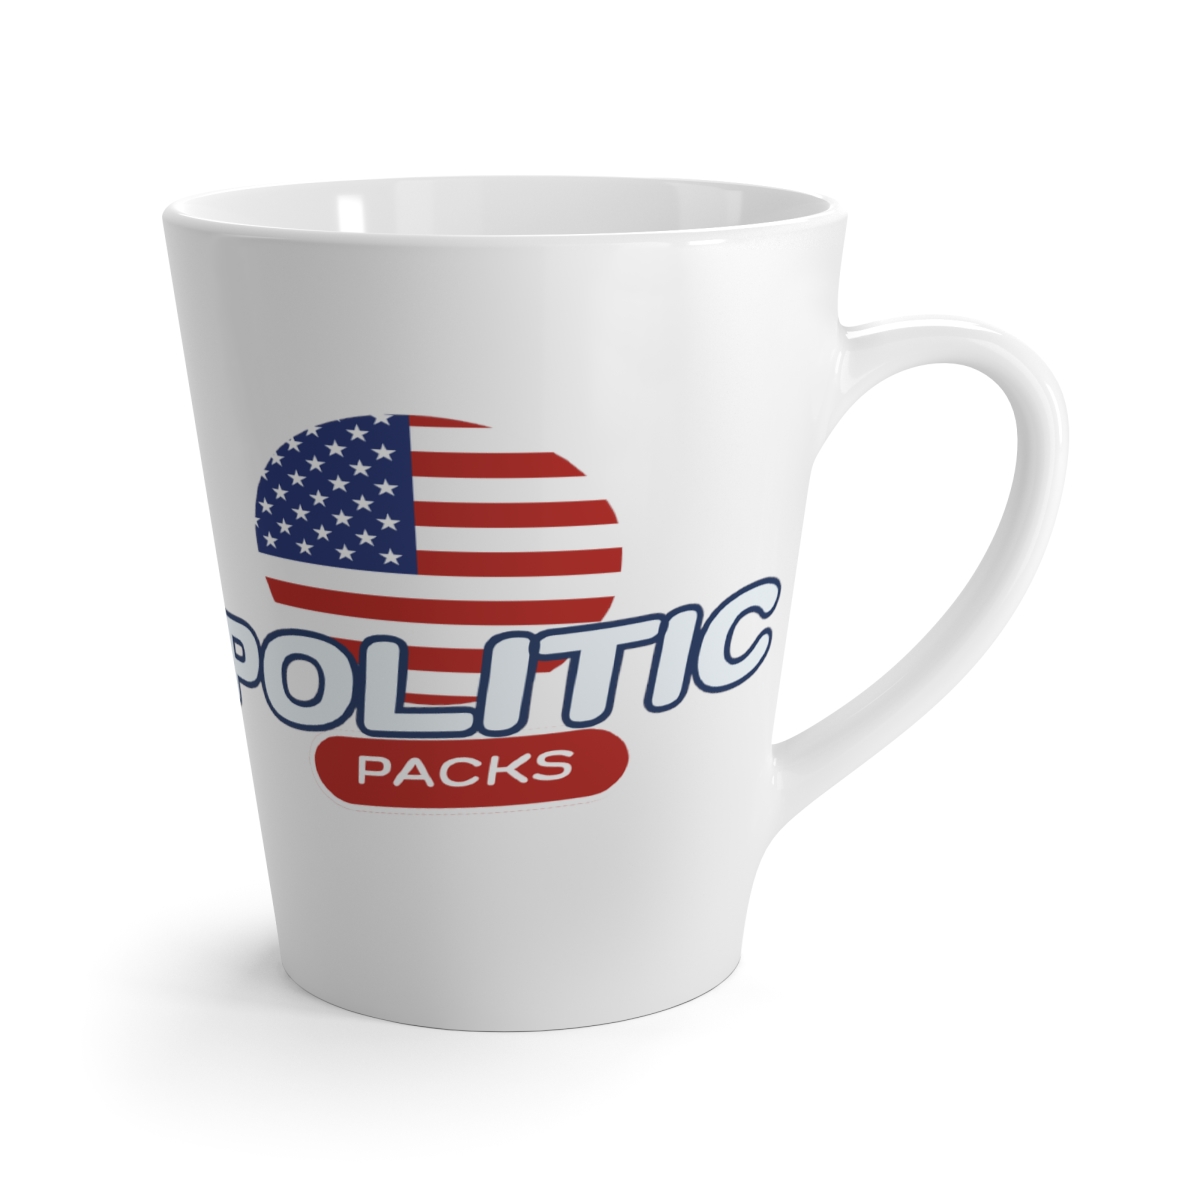 Politic Packs Latte Mug